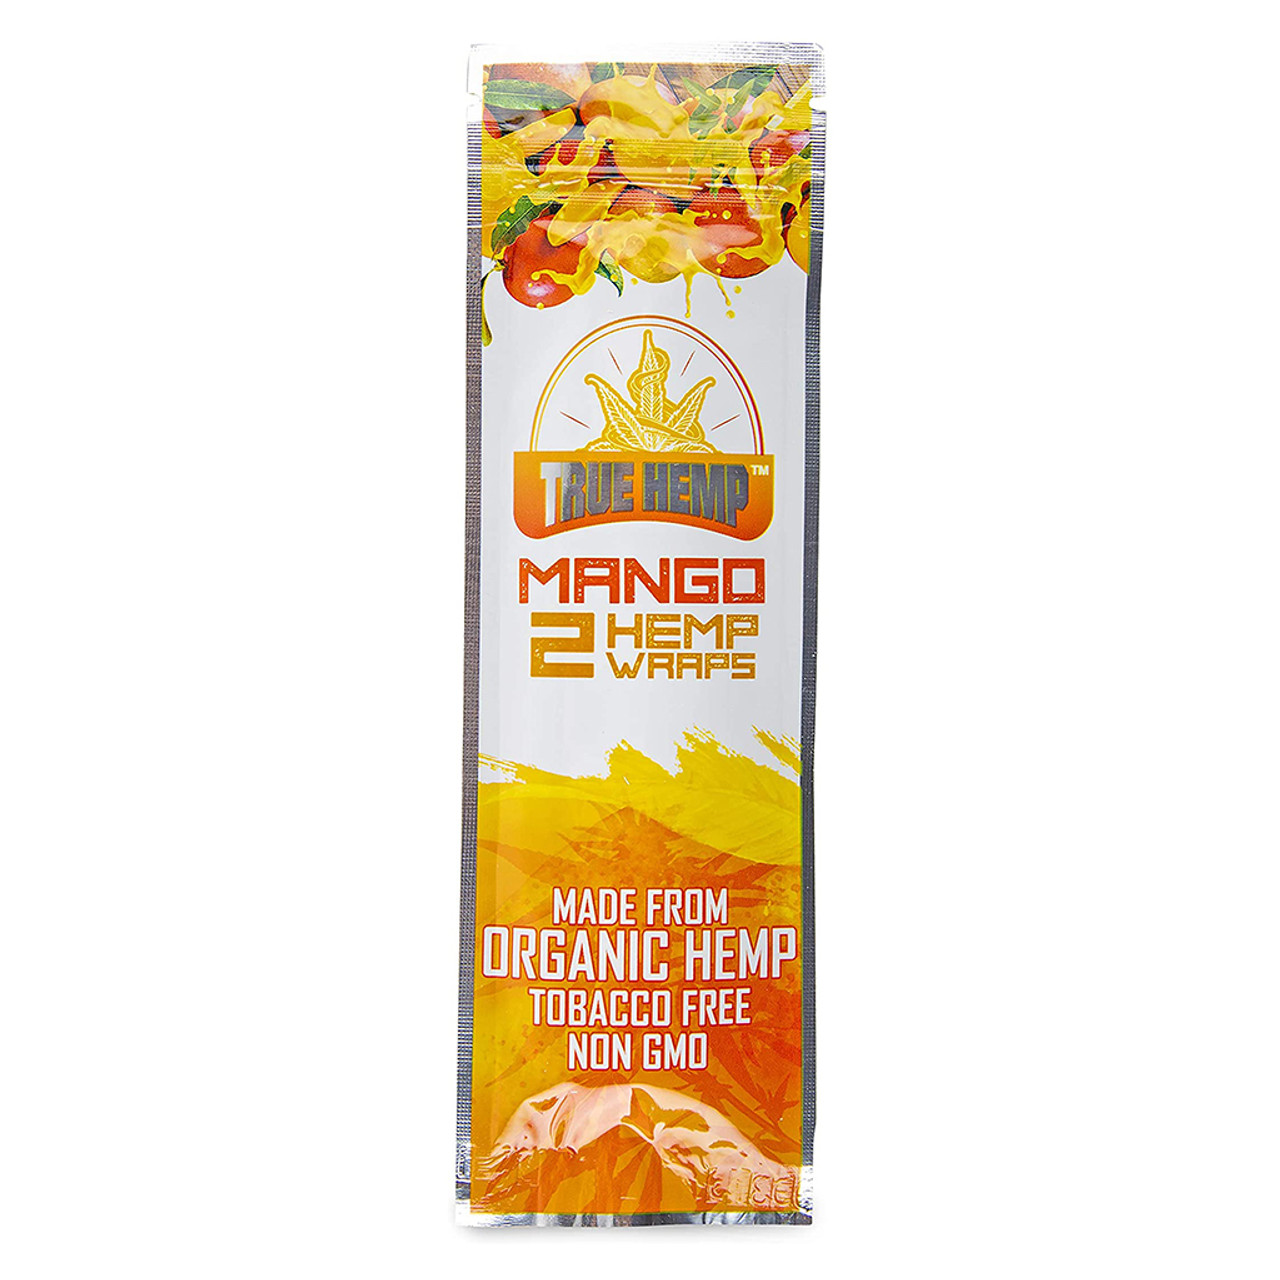 True Hemp - Mango, hemp wrap display for retail shops